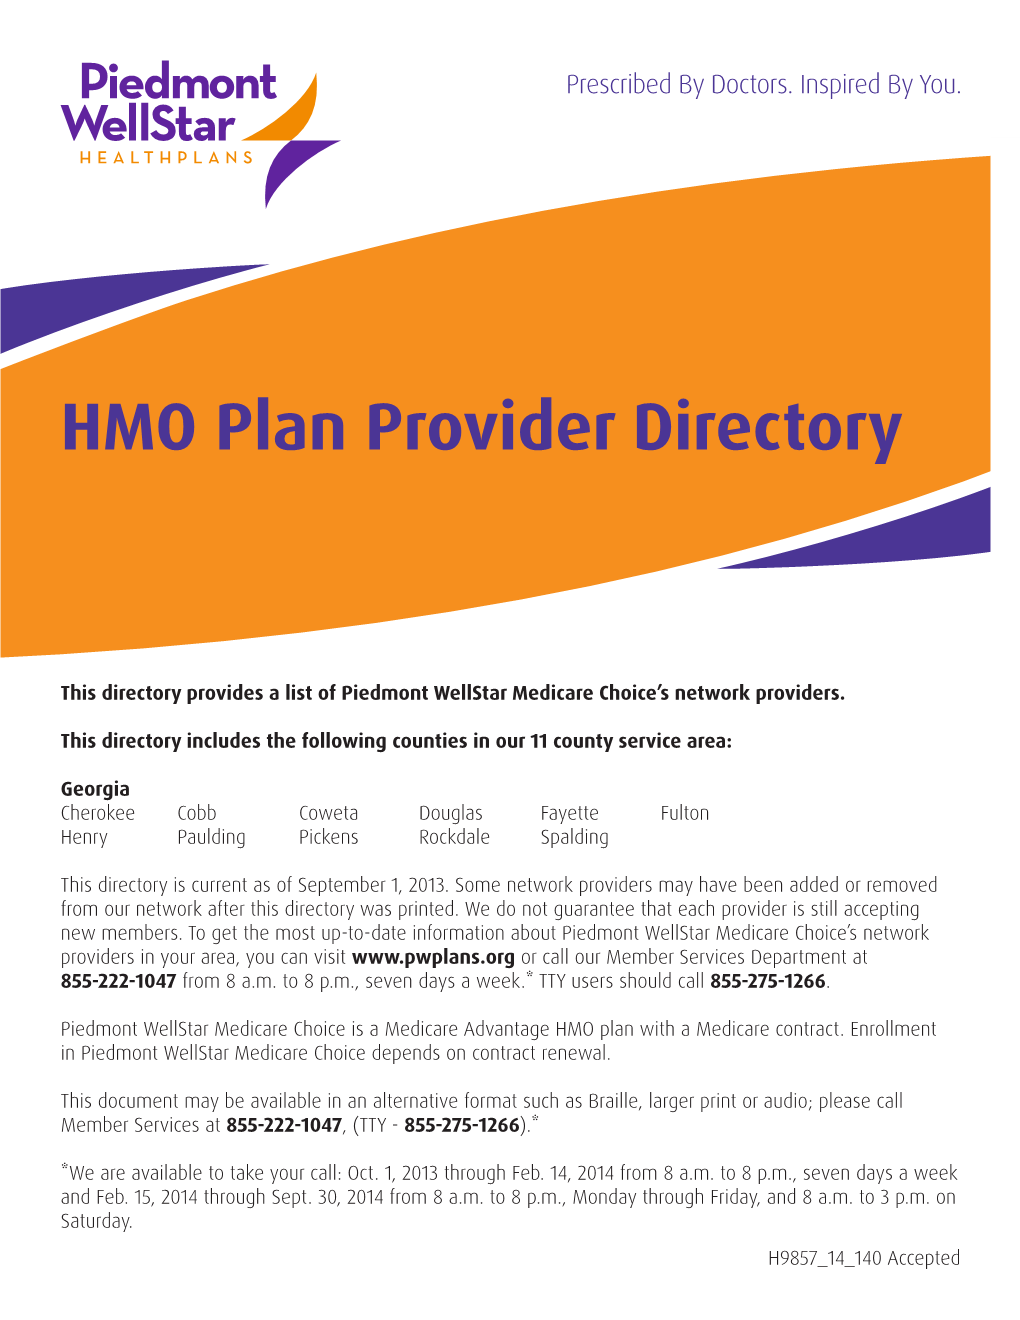 HMO Plan Provider Directory